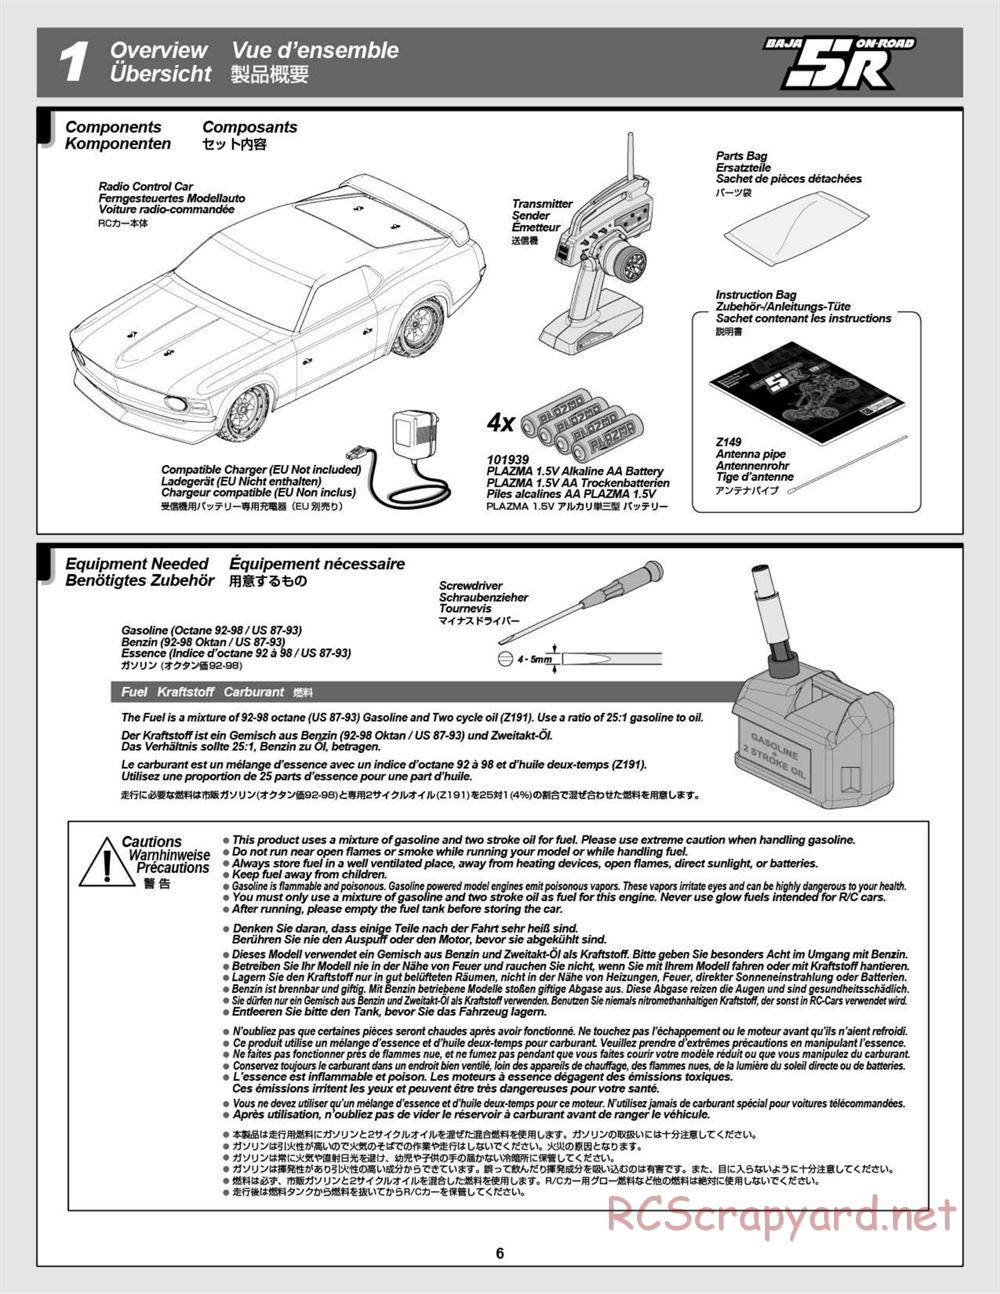 HPI - Baja 5R - Manual - Page 6